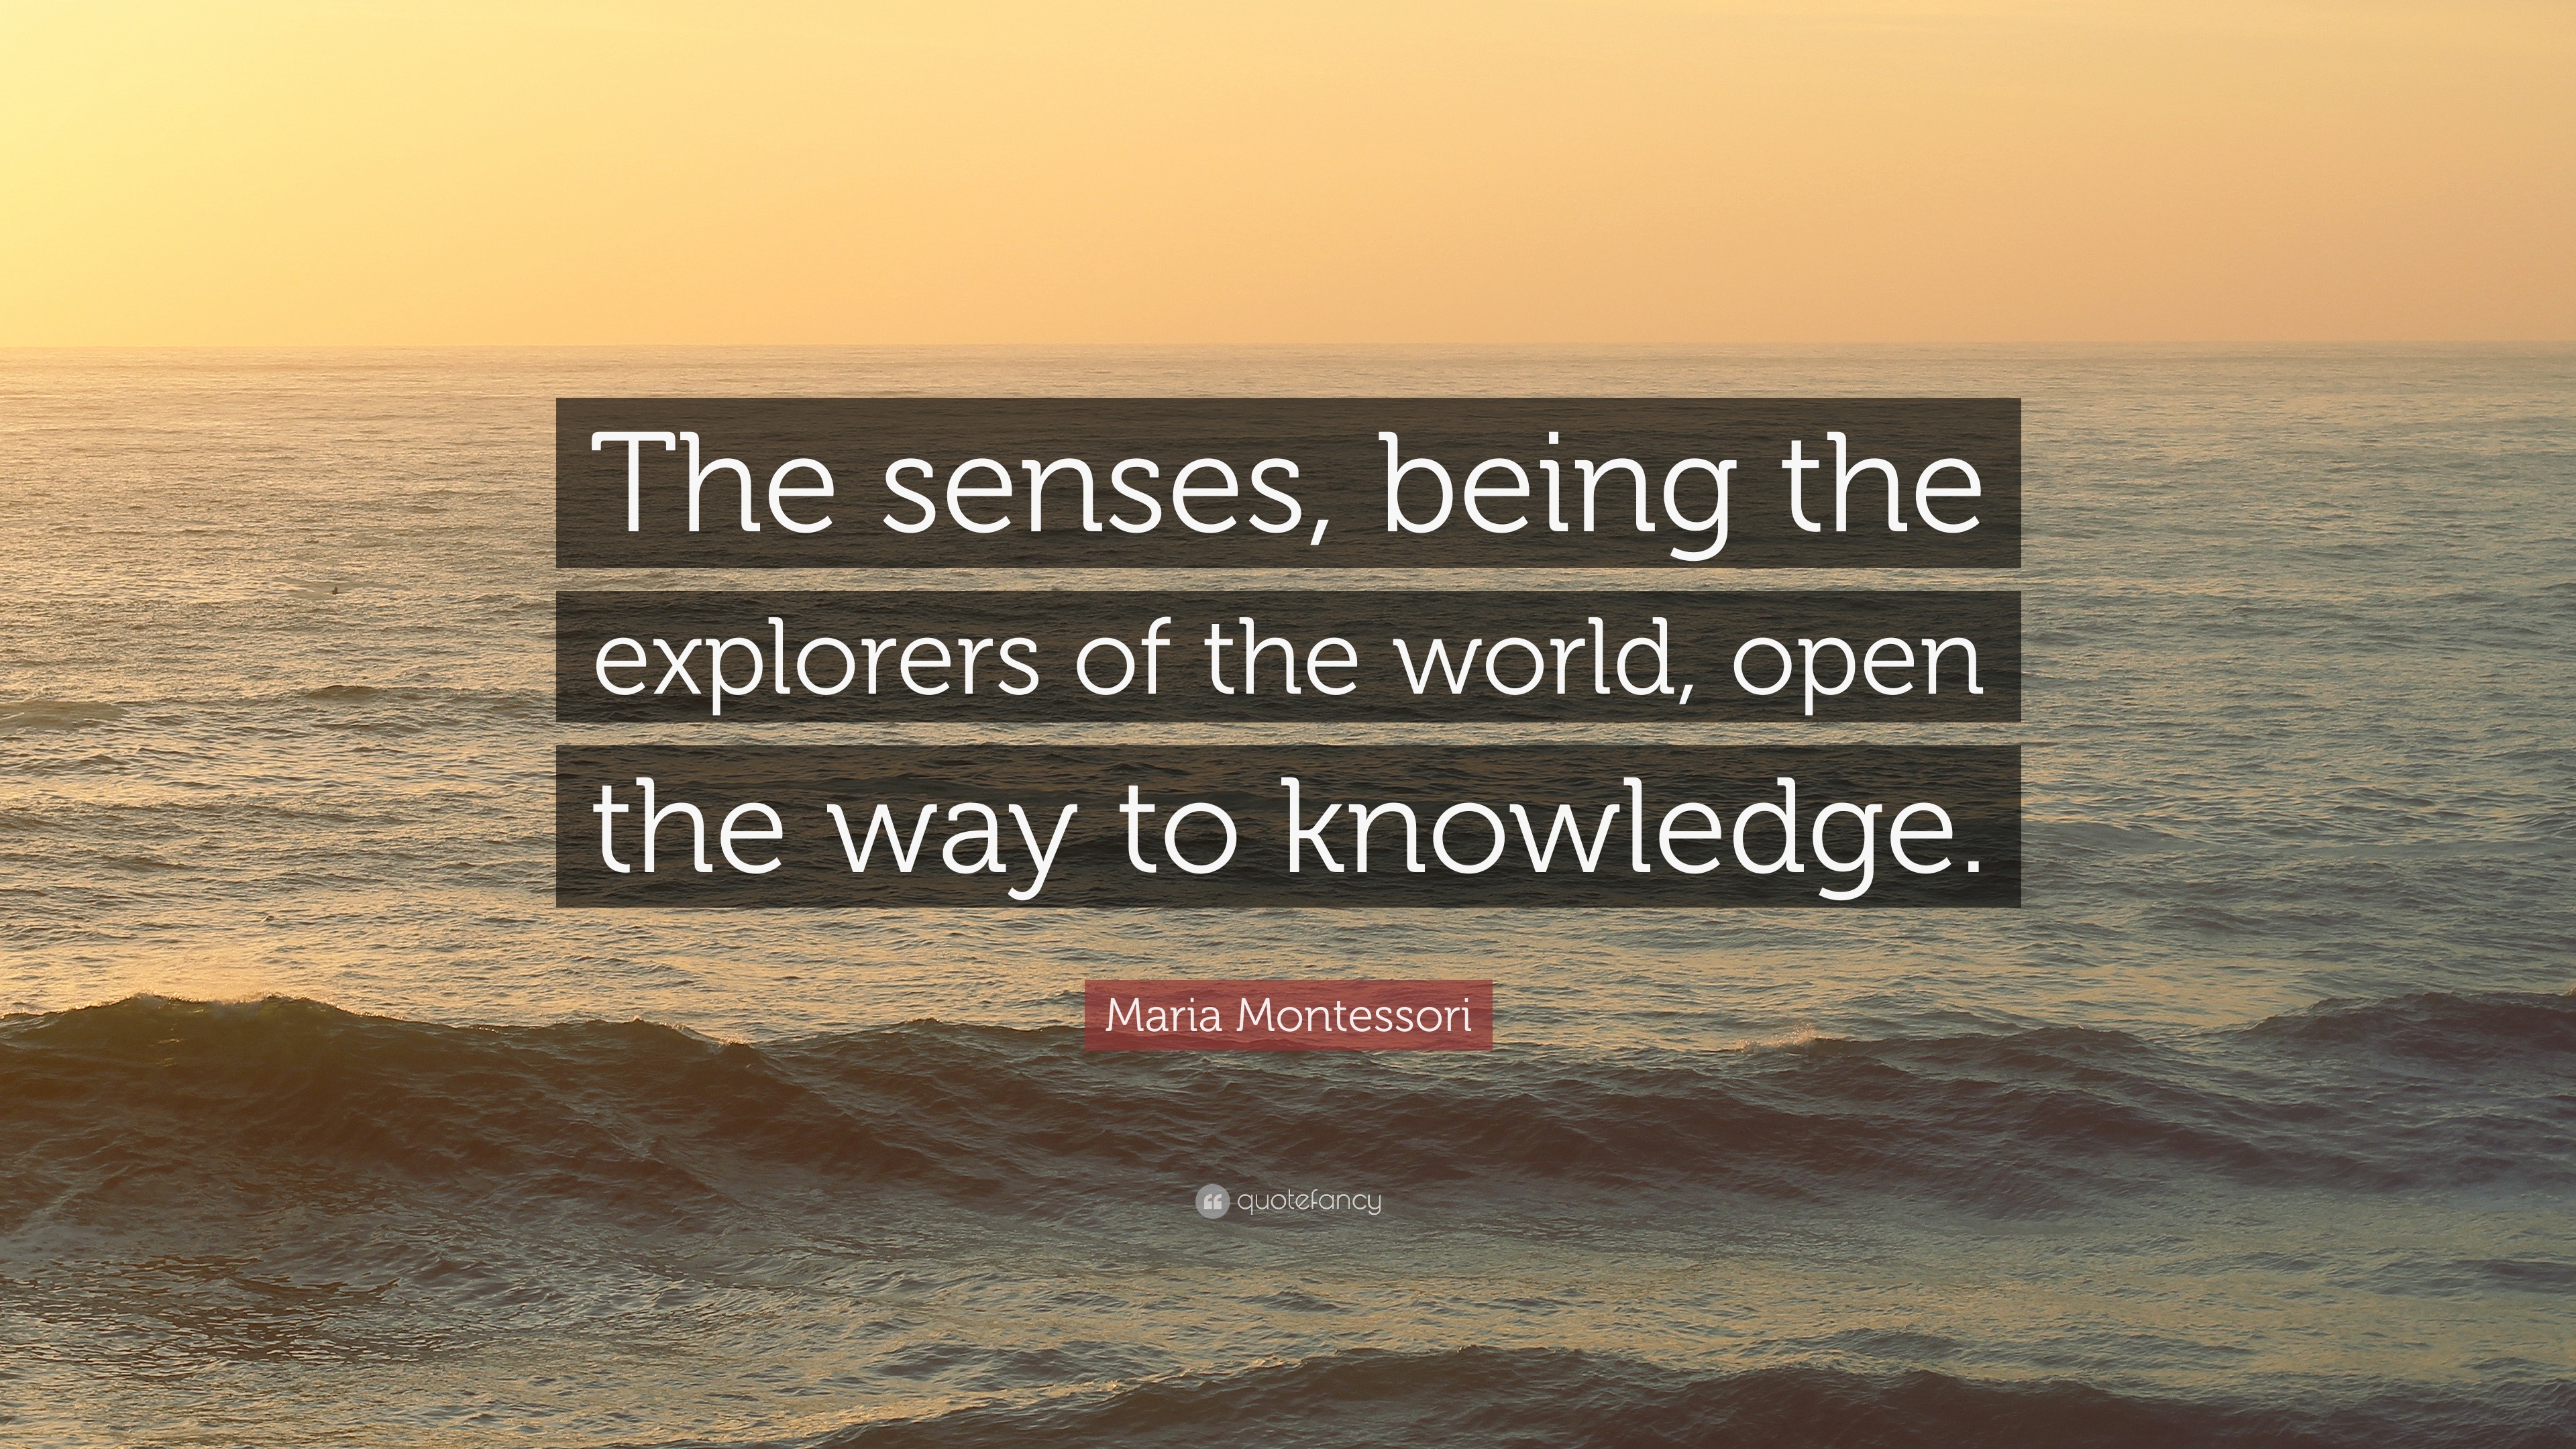 Maria Montessori Quote “The senses, being the explorers